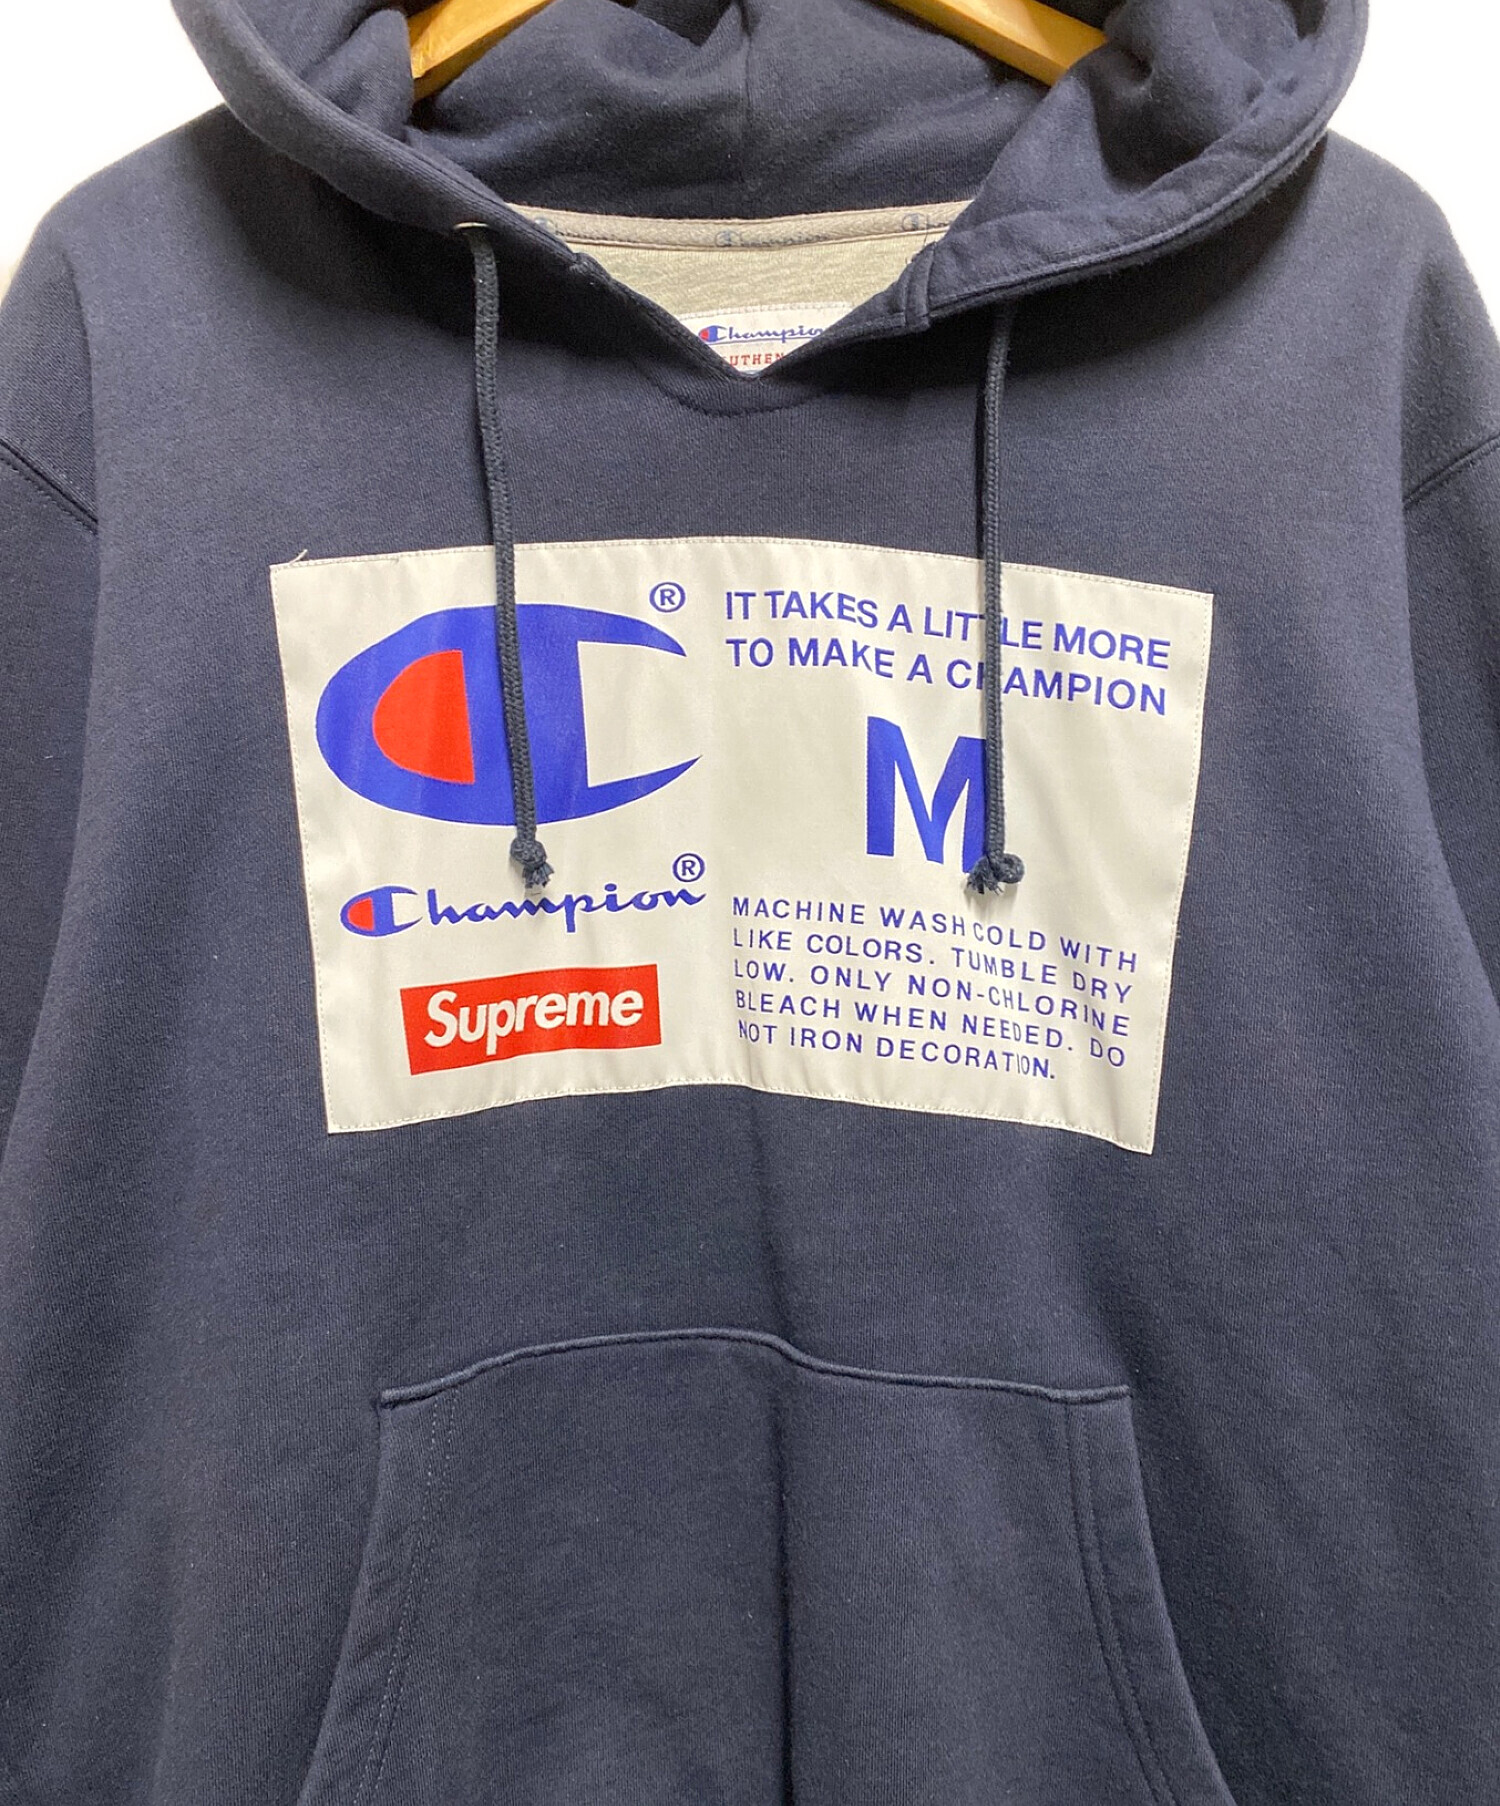 SUPREME (シュプリーム) Champion (チャンピオンリバースウィーブ) Label Hooded Sweatshirt ネイビー  サイズ:М